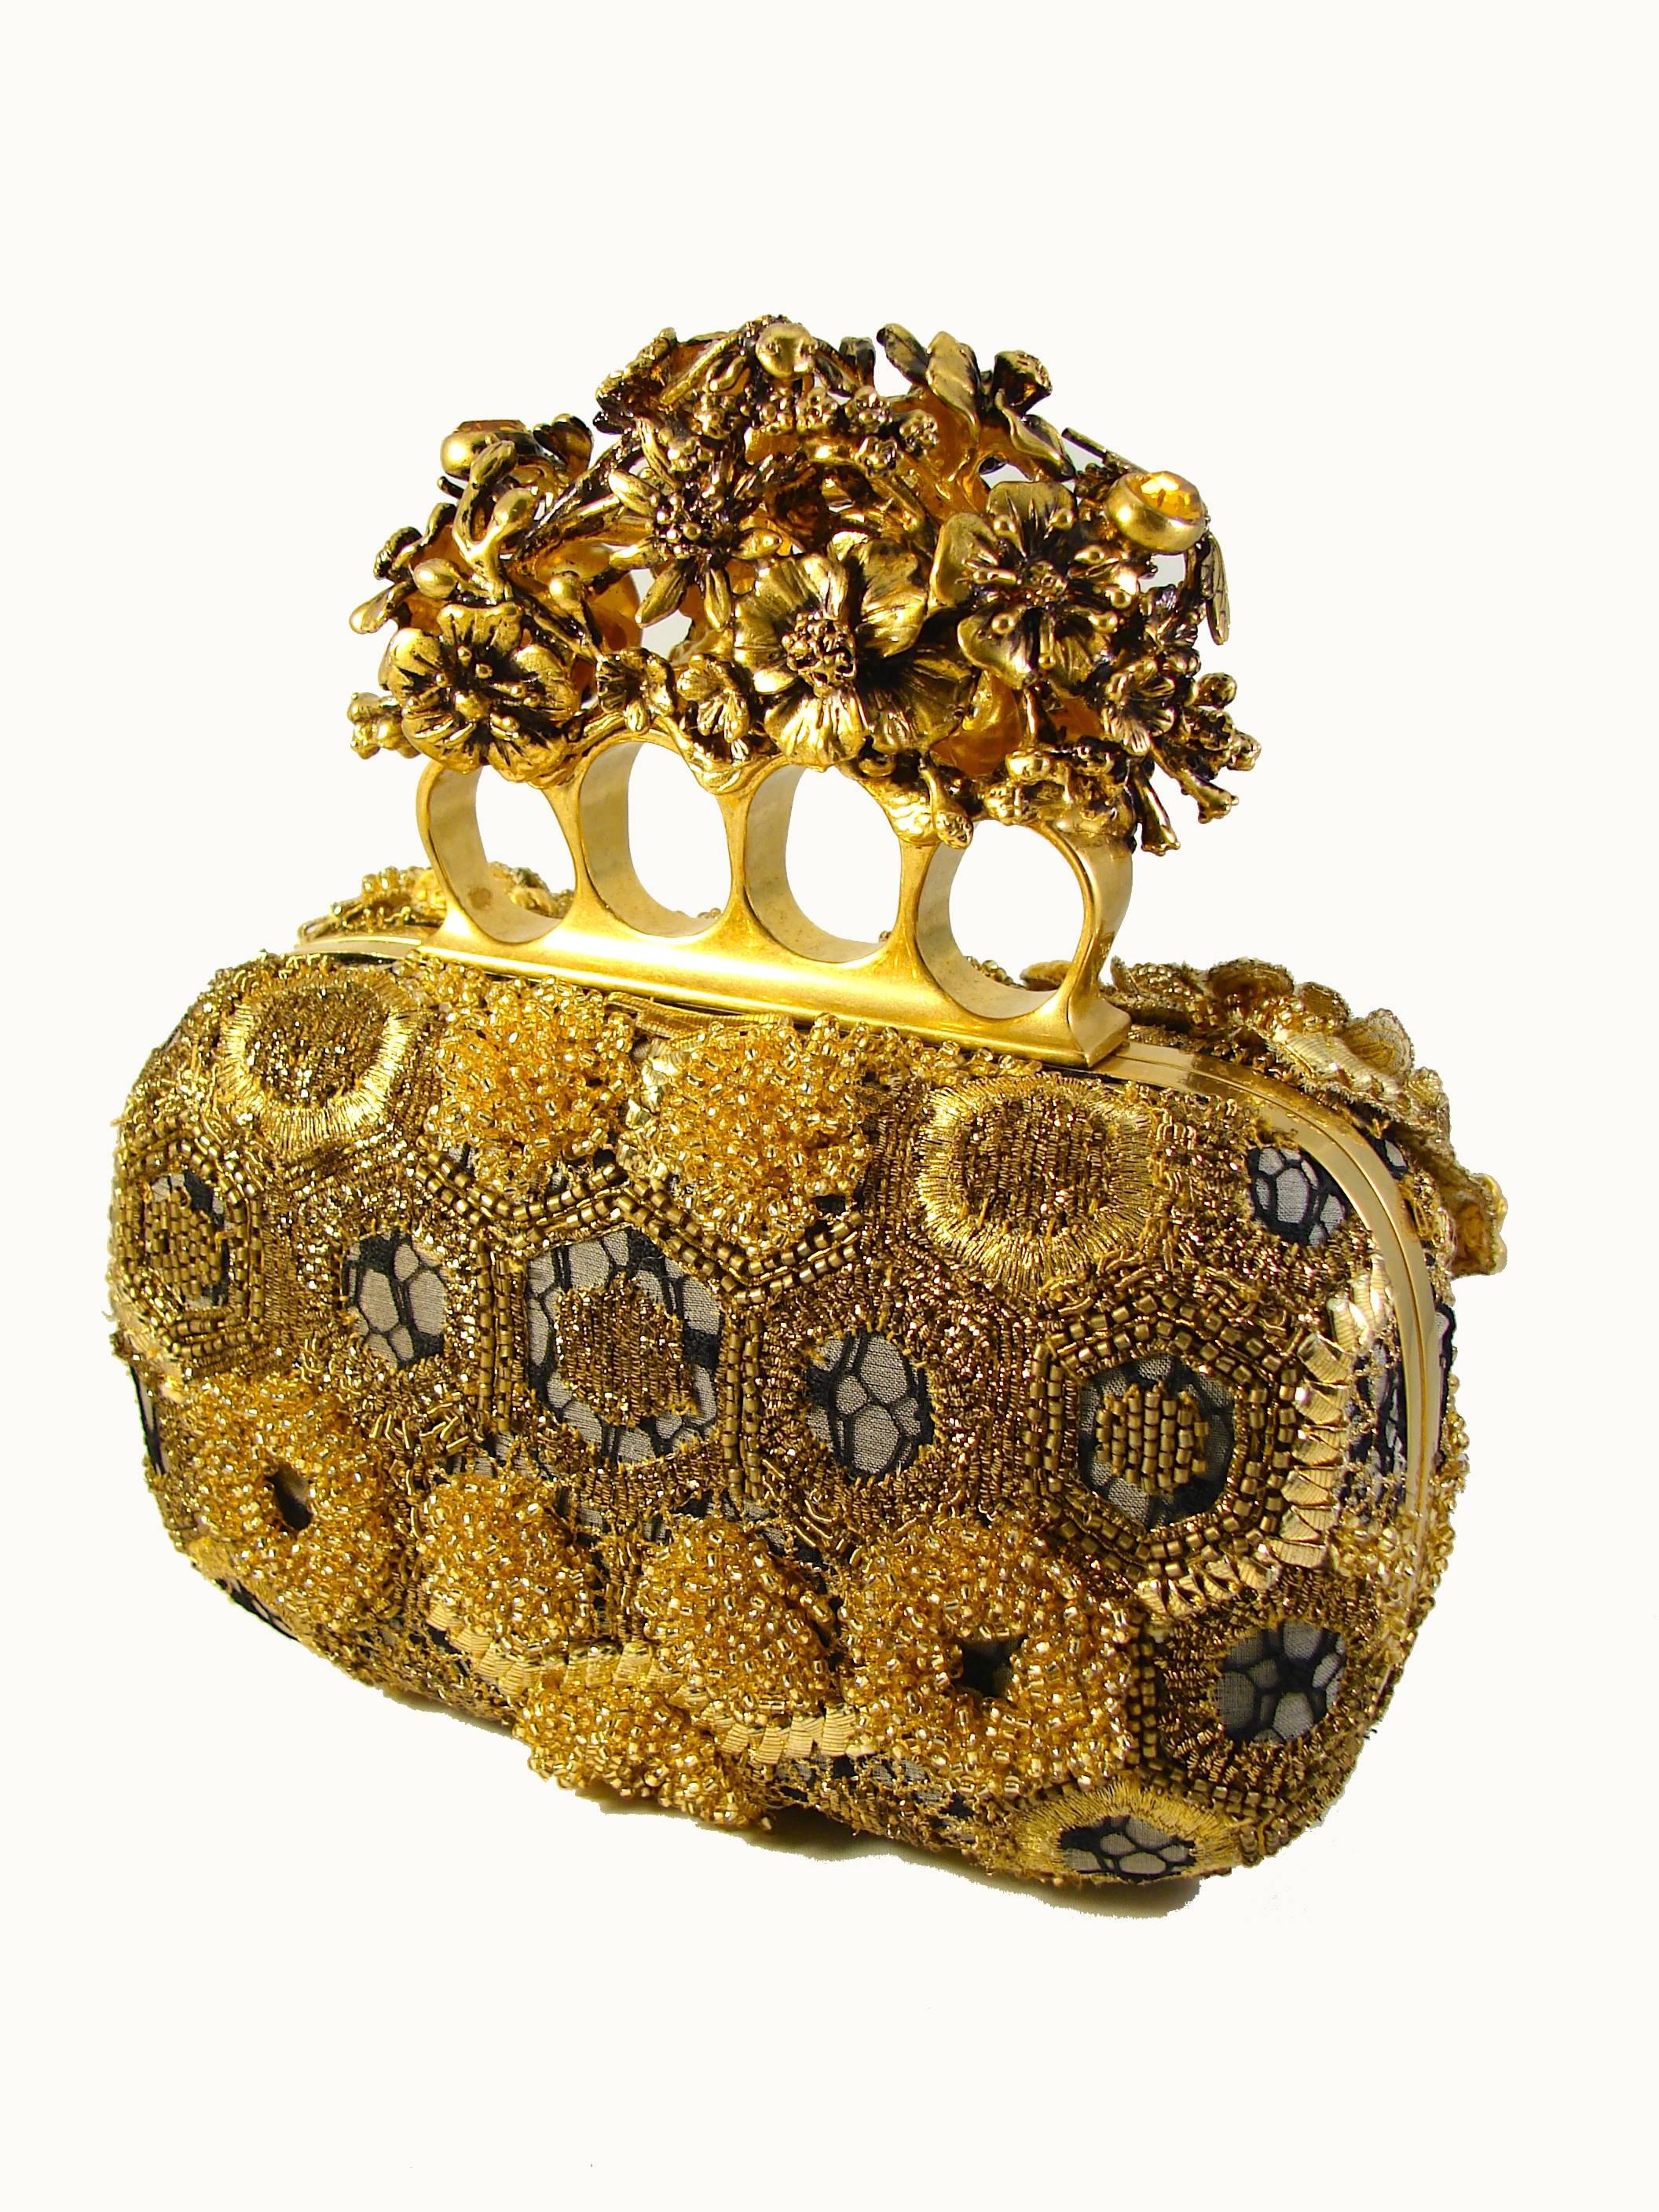 Women's Opulent Alexander McQueen Raso Seta Knuckle Box Clutch Bag in Gold 2014 